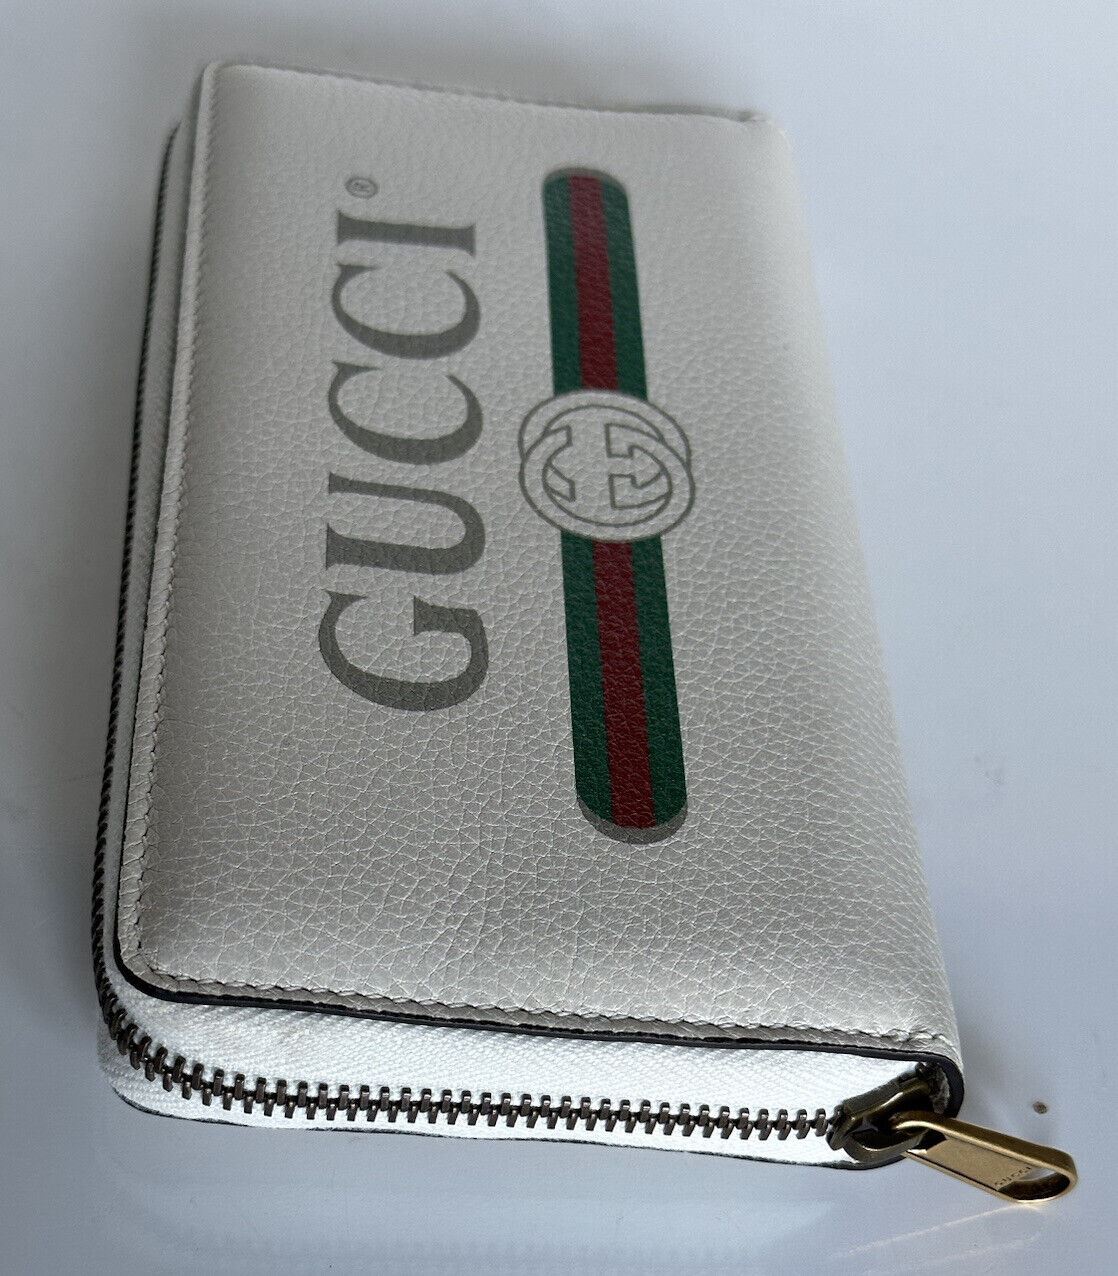 NWT Gucci G Web Gucci Print Zip Round Ivory Card Средний кошелек 496317 Италия 